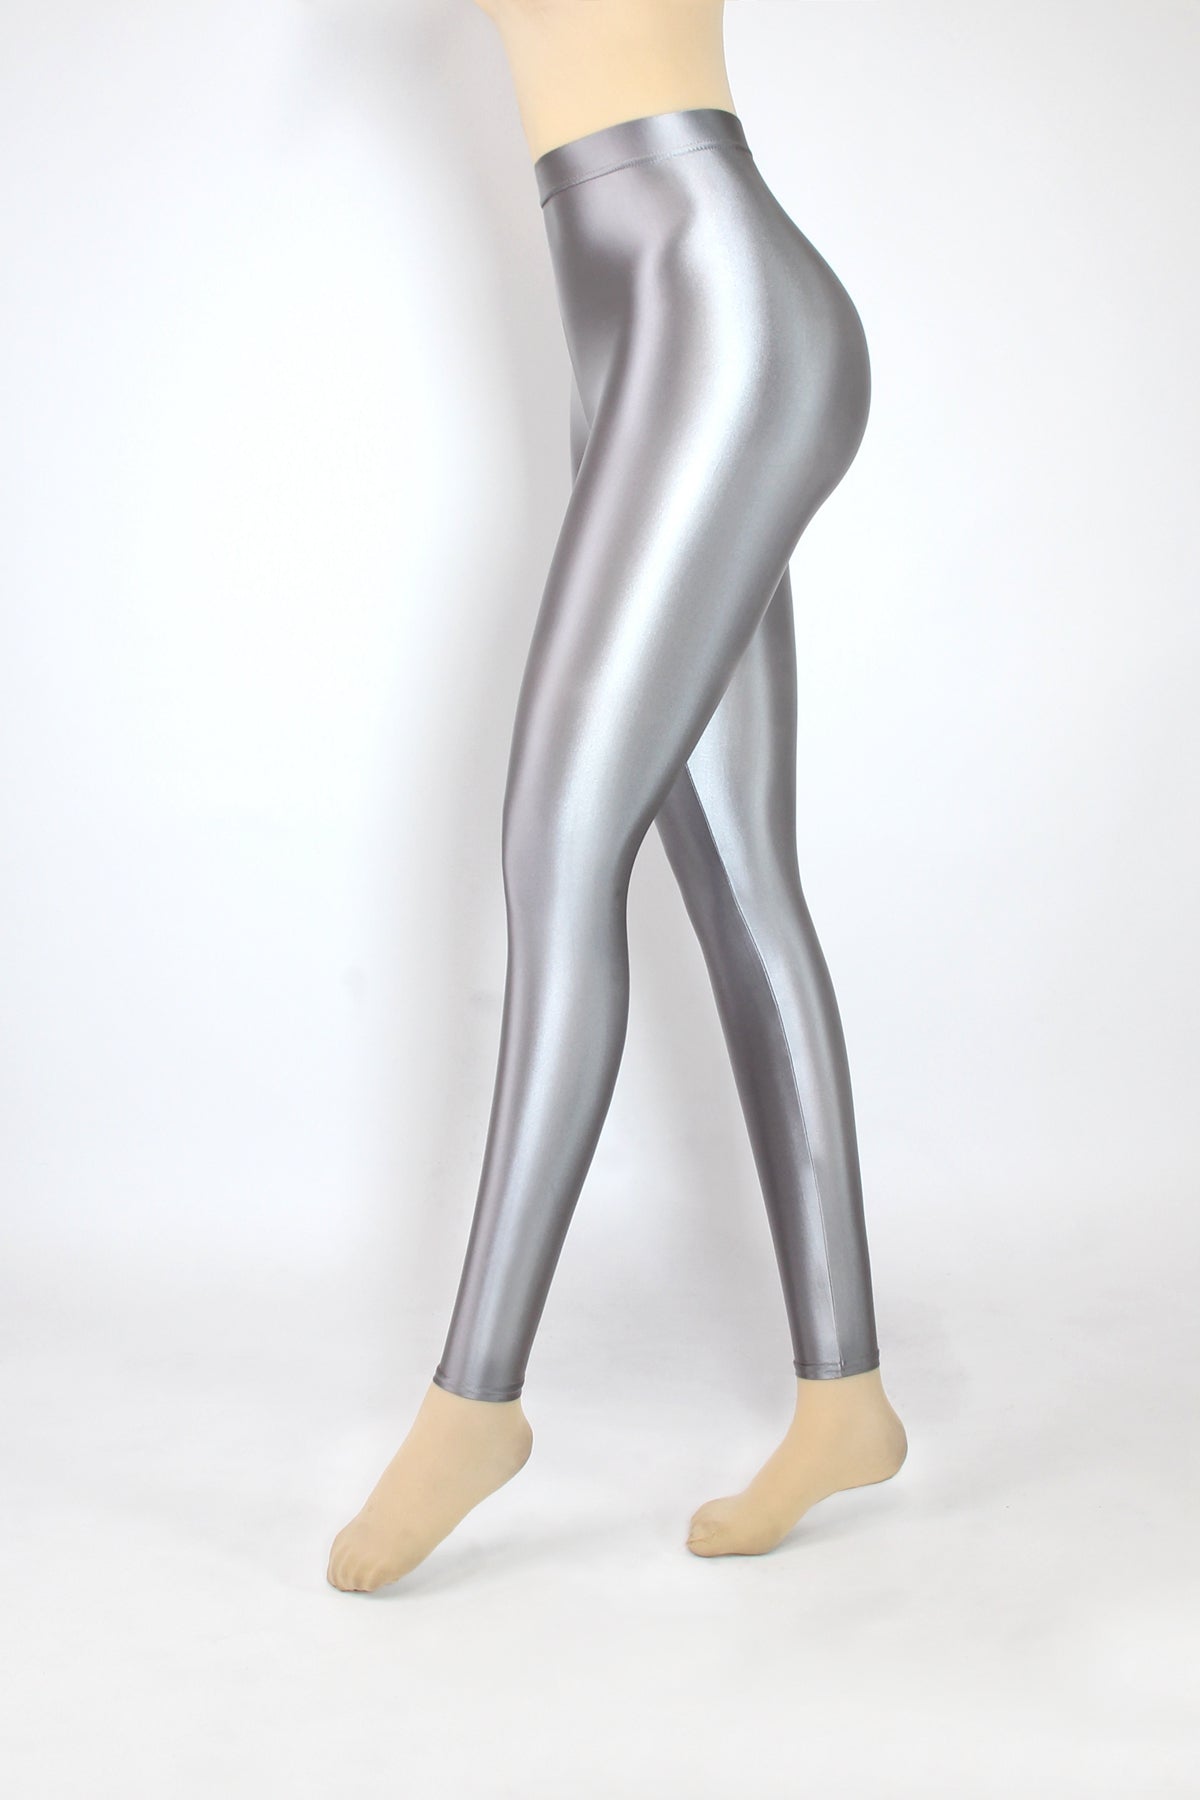 Women Workout Hot Silver Print Leggings Fitness Sport Yoga Pants -  Walmart.com